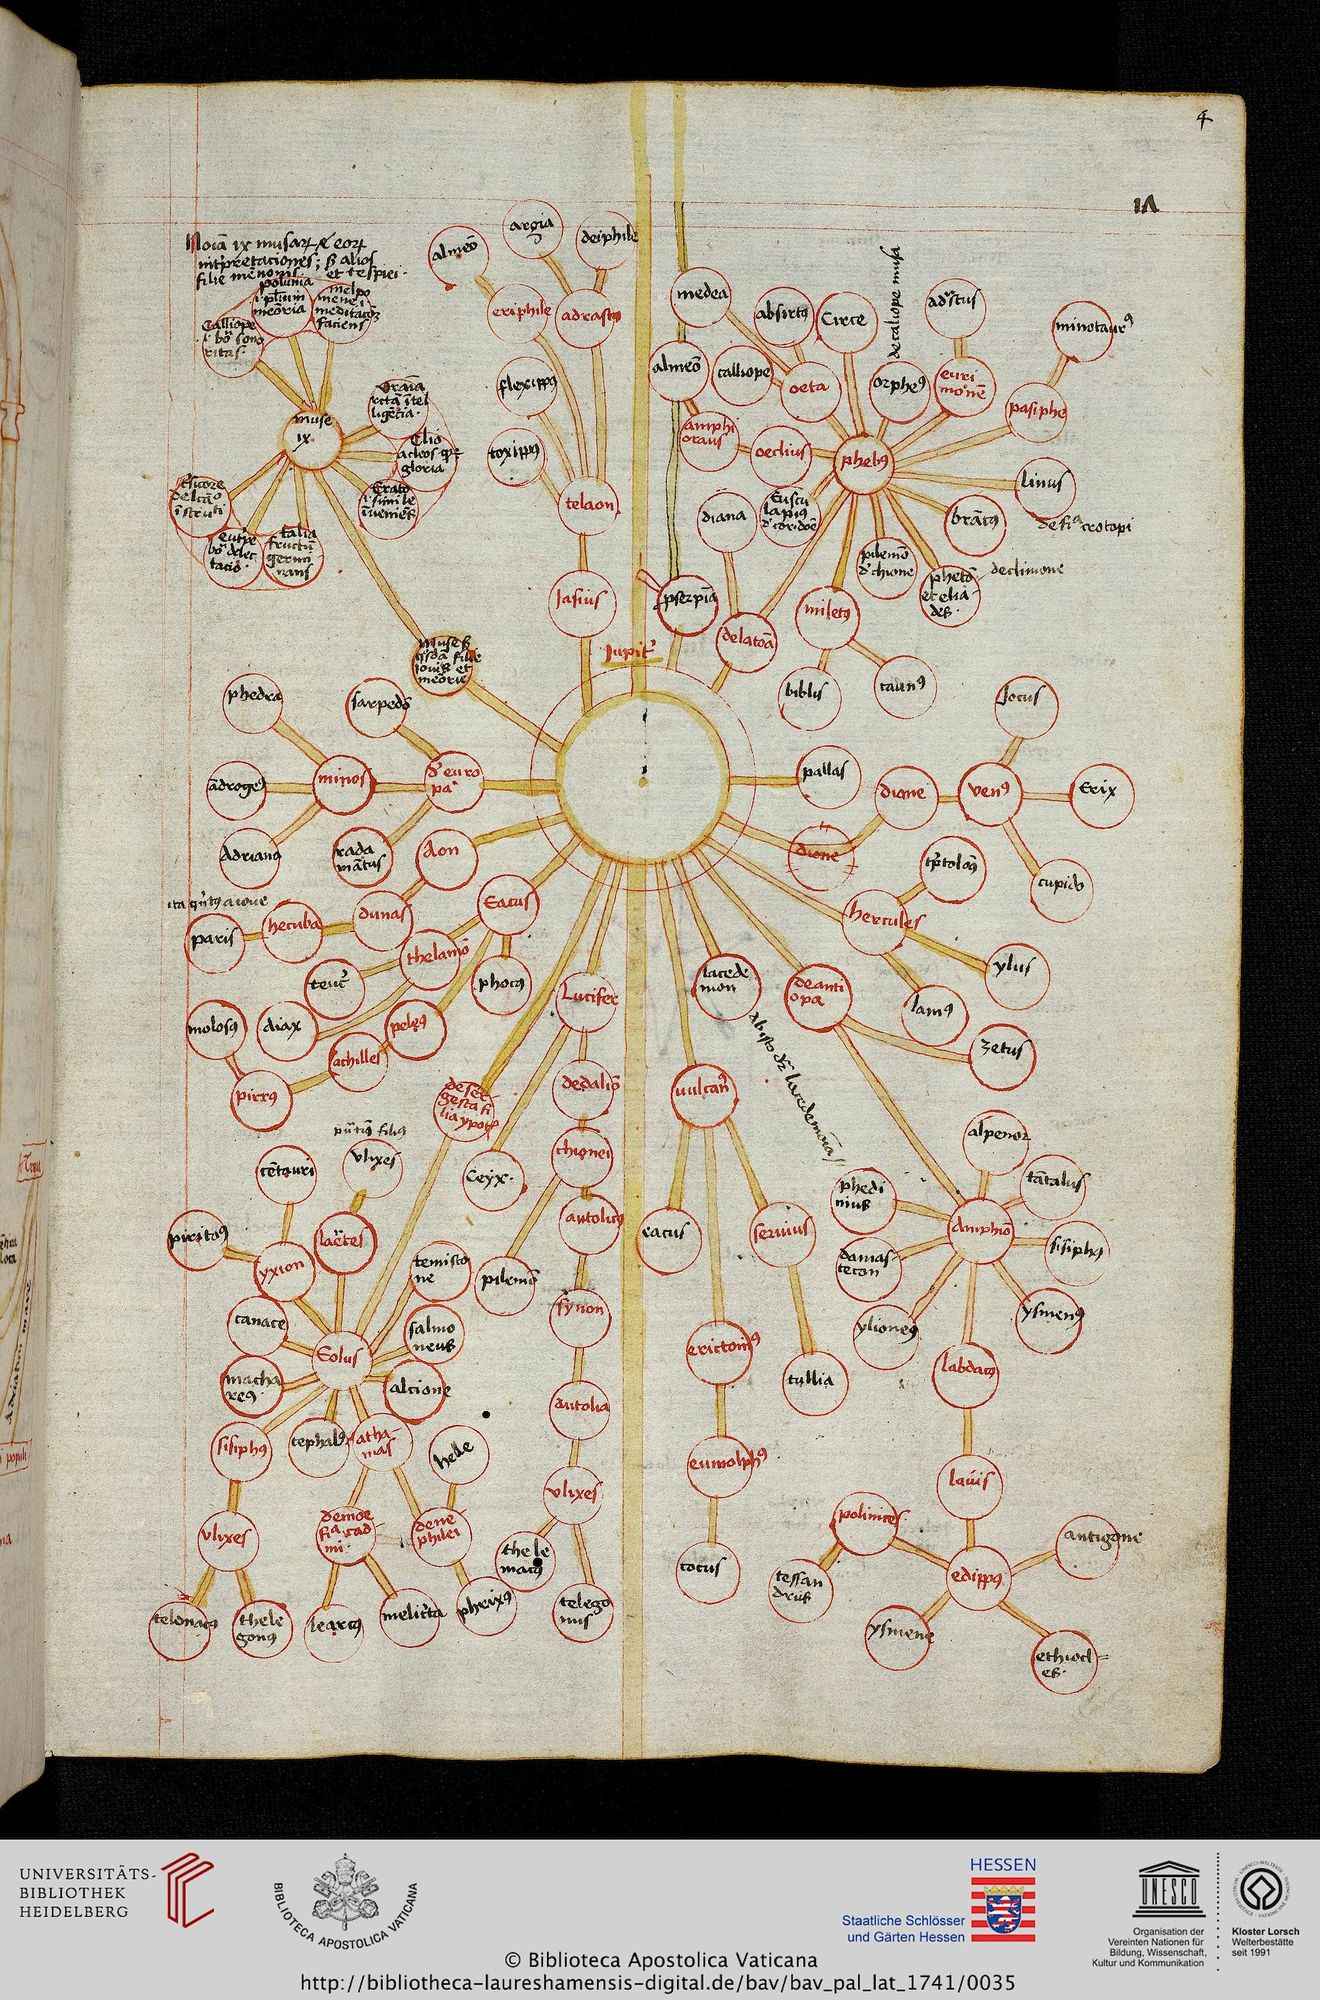 Genealogy of the god Jupiter, 1400s? (Vatican manuscript)